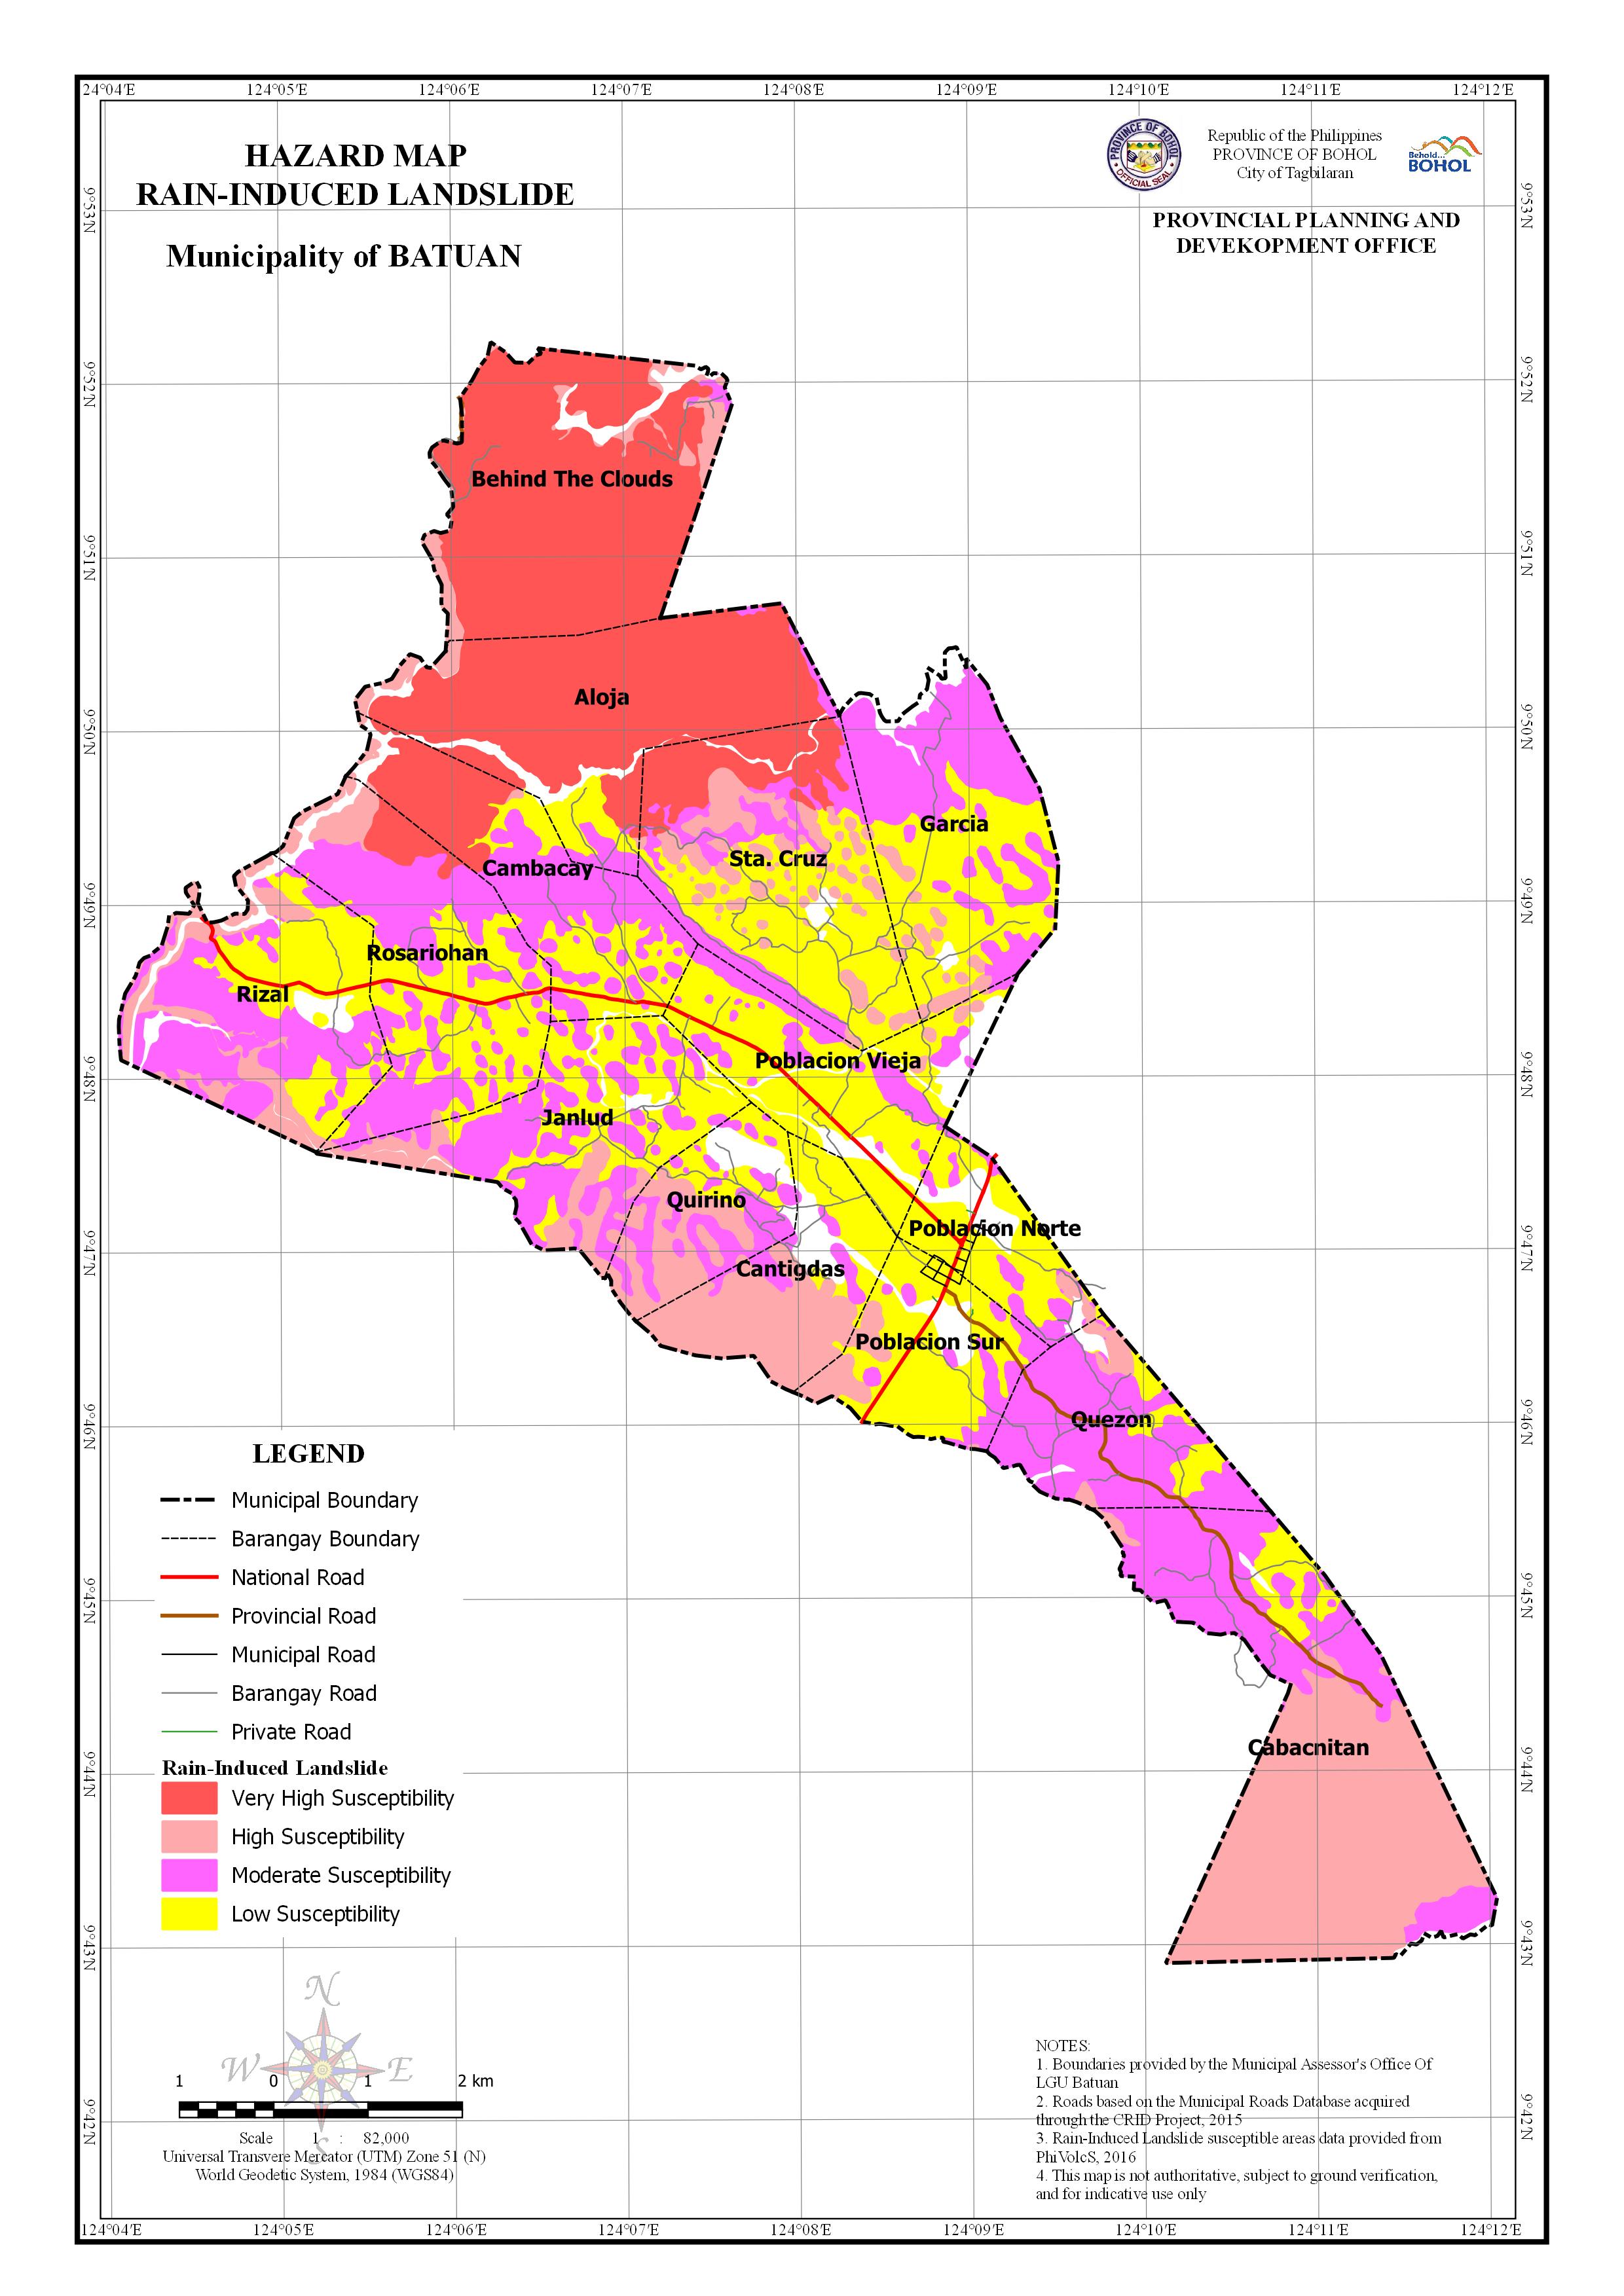 Rain-Induced Landslide Map of Batuan